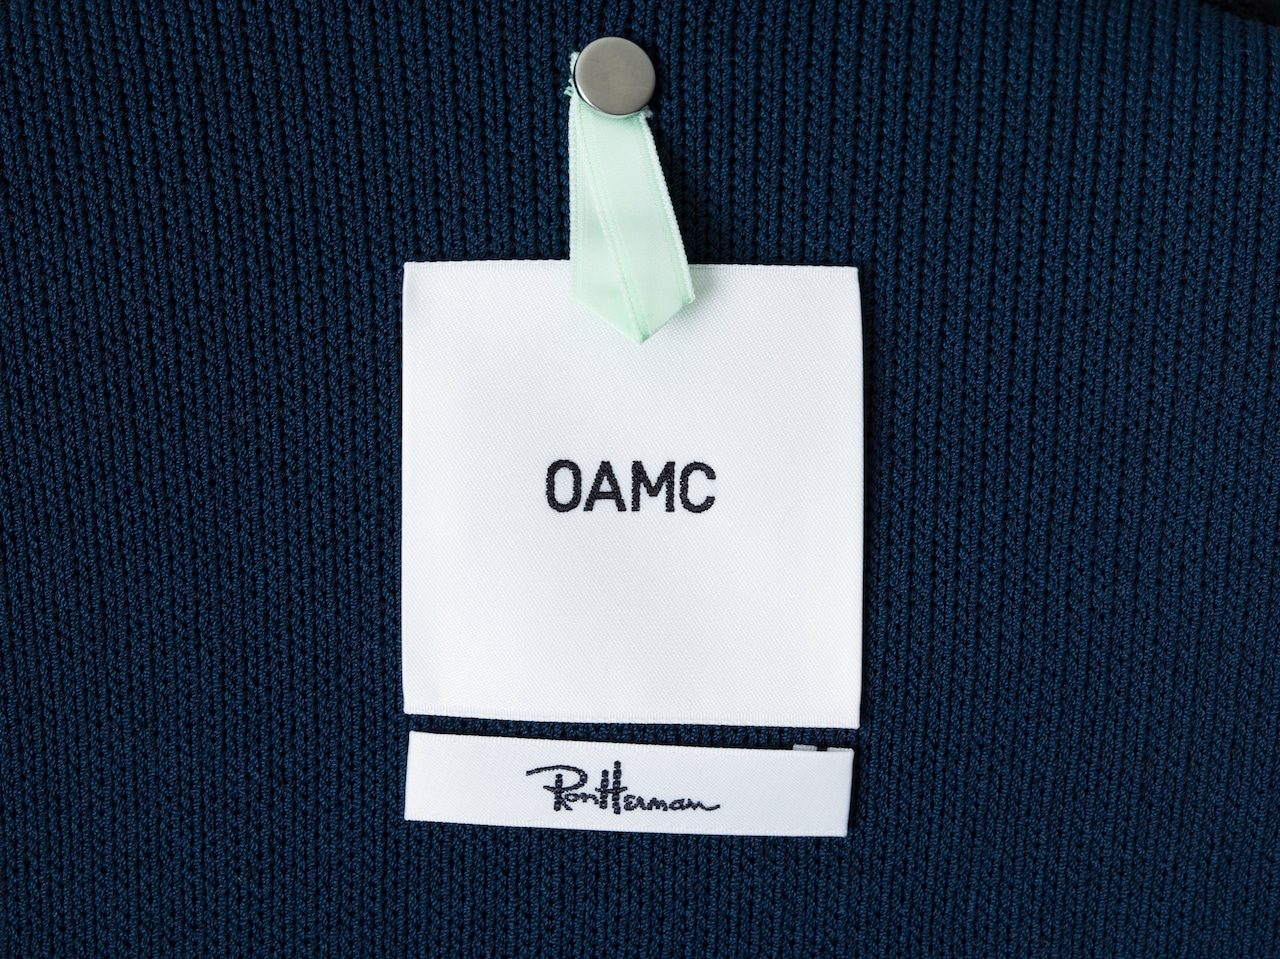 OAMC for Ron Herman ARNO JUMPER 8.28(Sat) New Arrival News｜Ron Herman